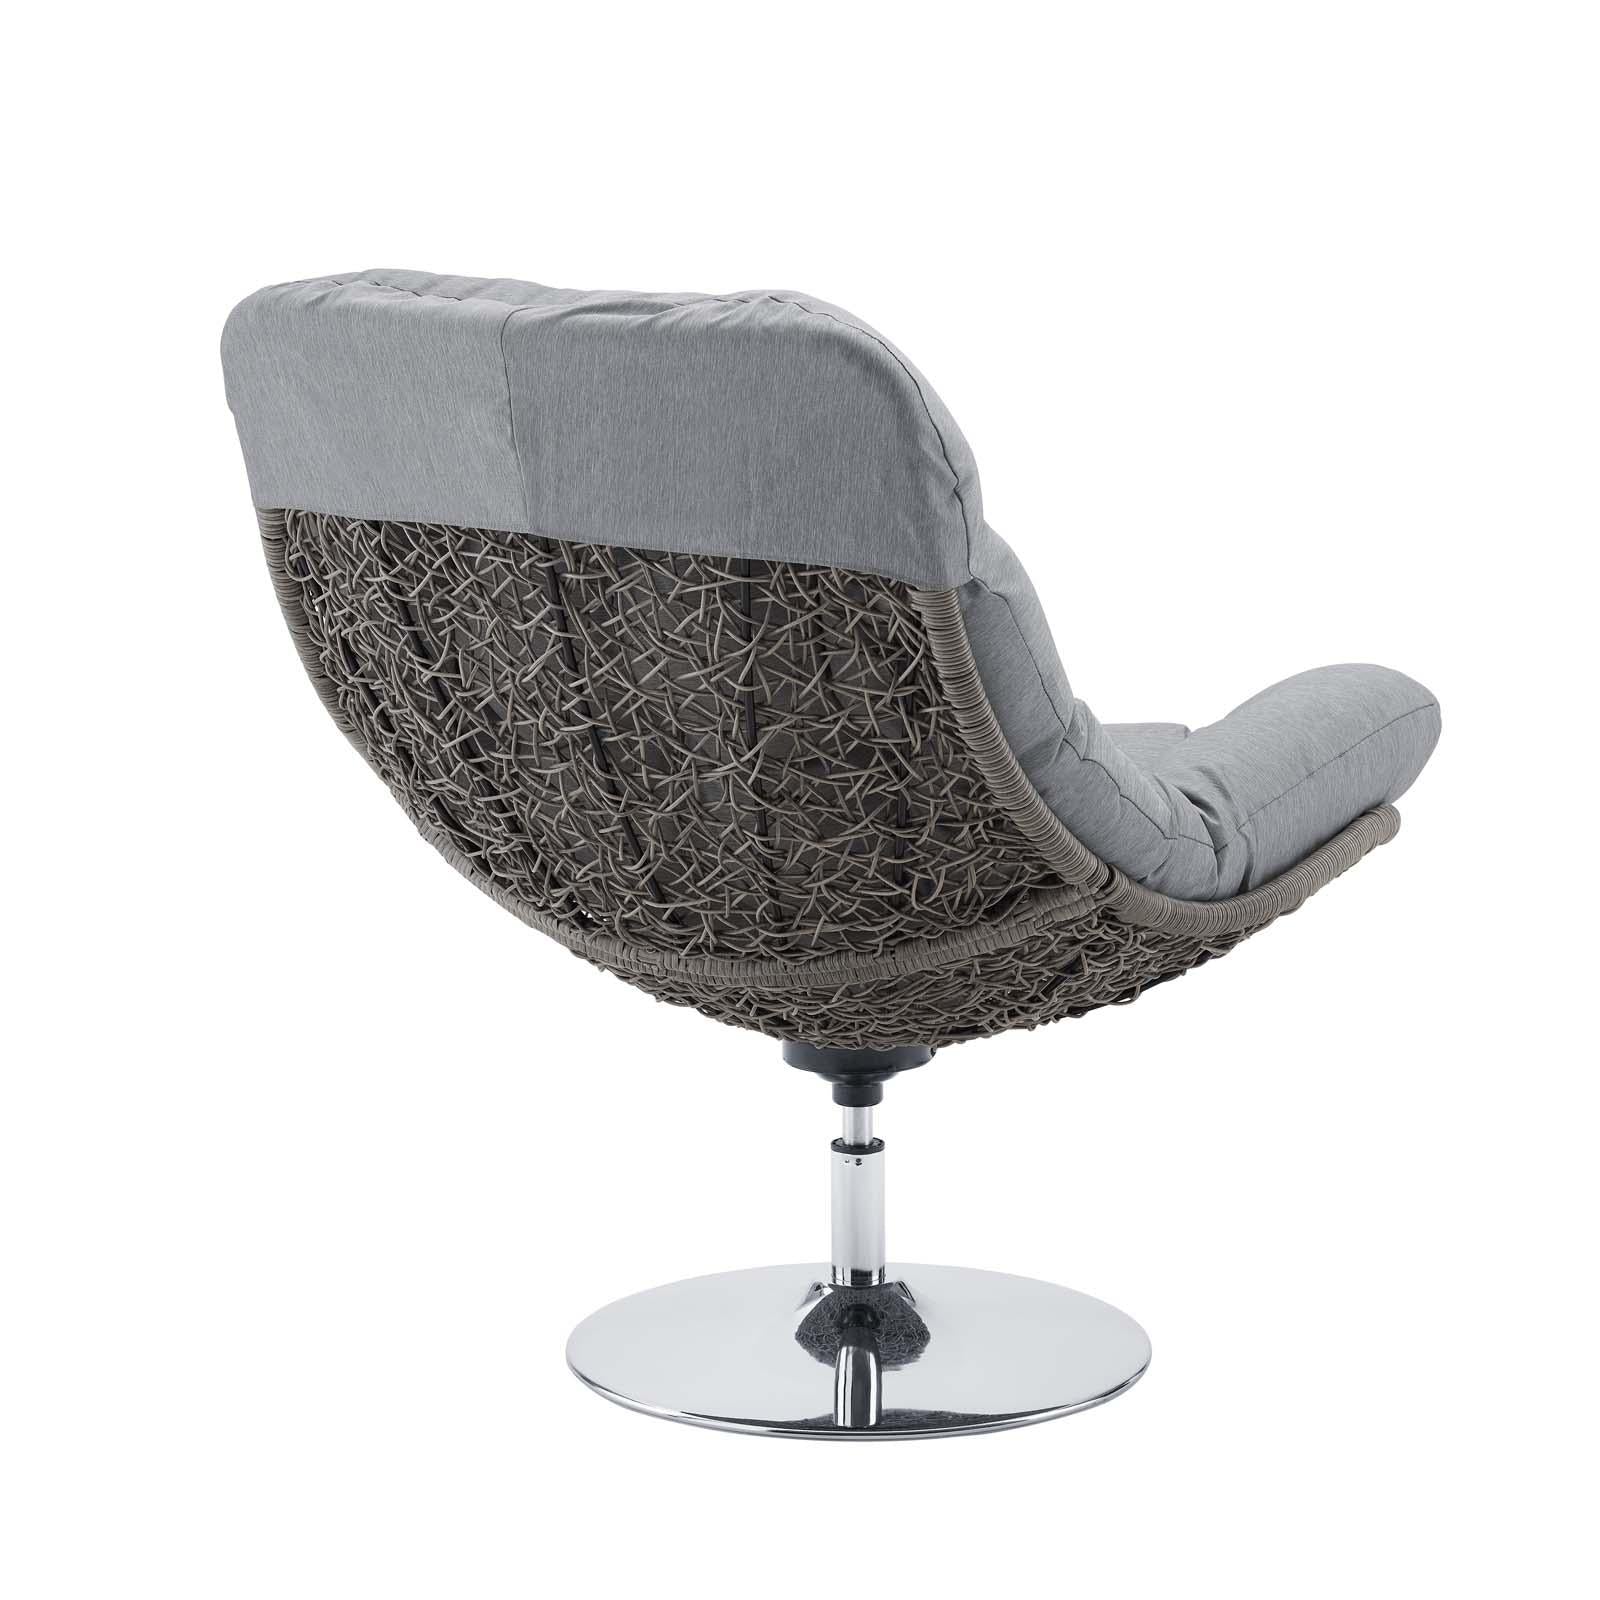 Modway Furniture Modern Brighton Wicker Rattan Outdoor Patio Swivel Lounge Chair - EEI-3616